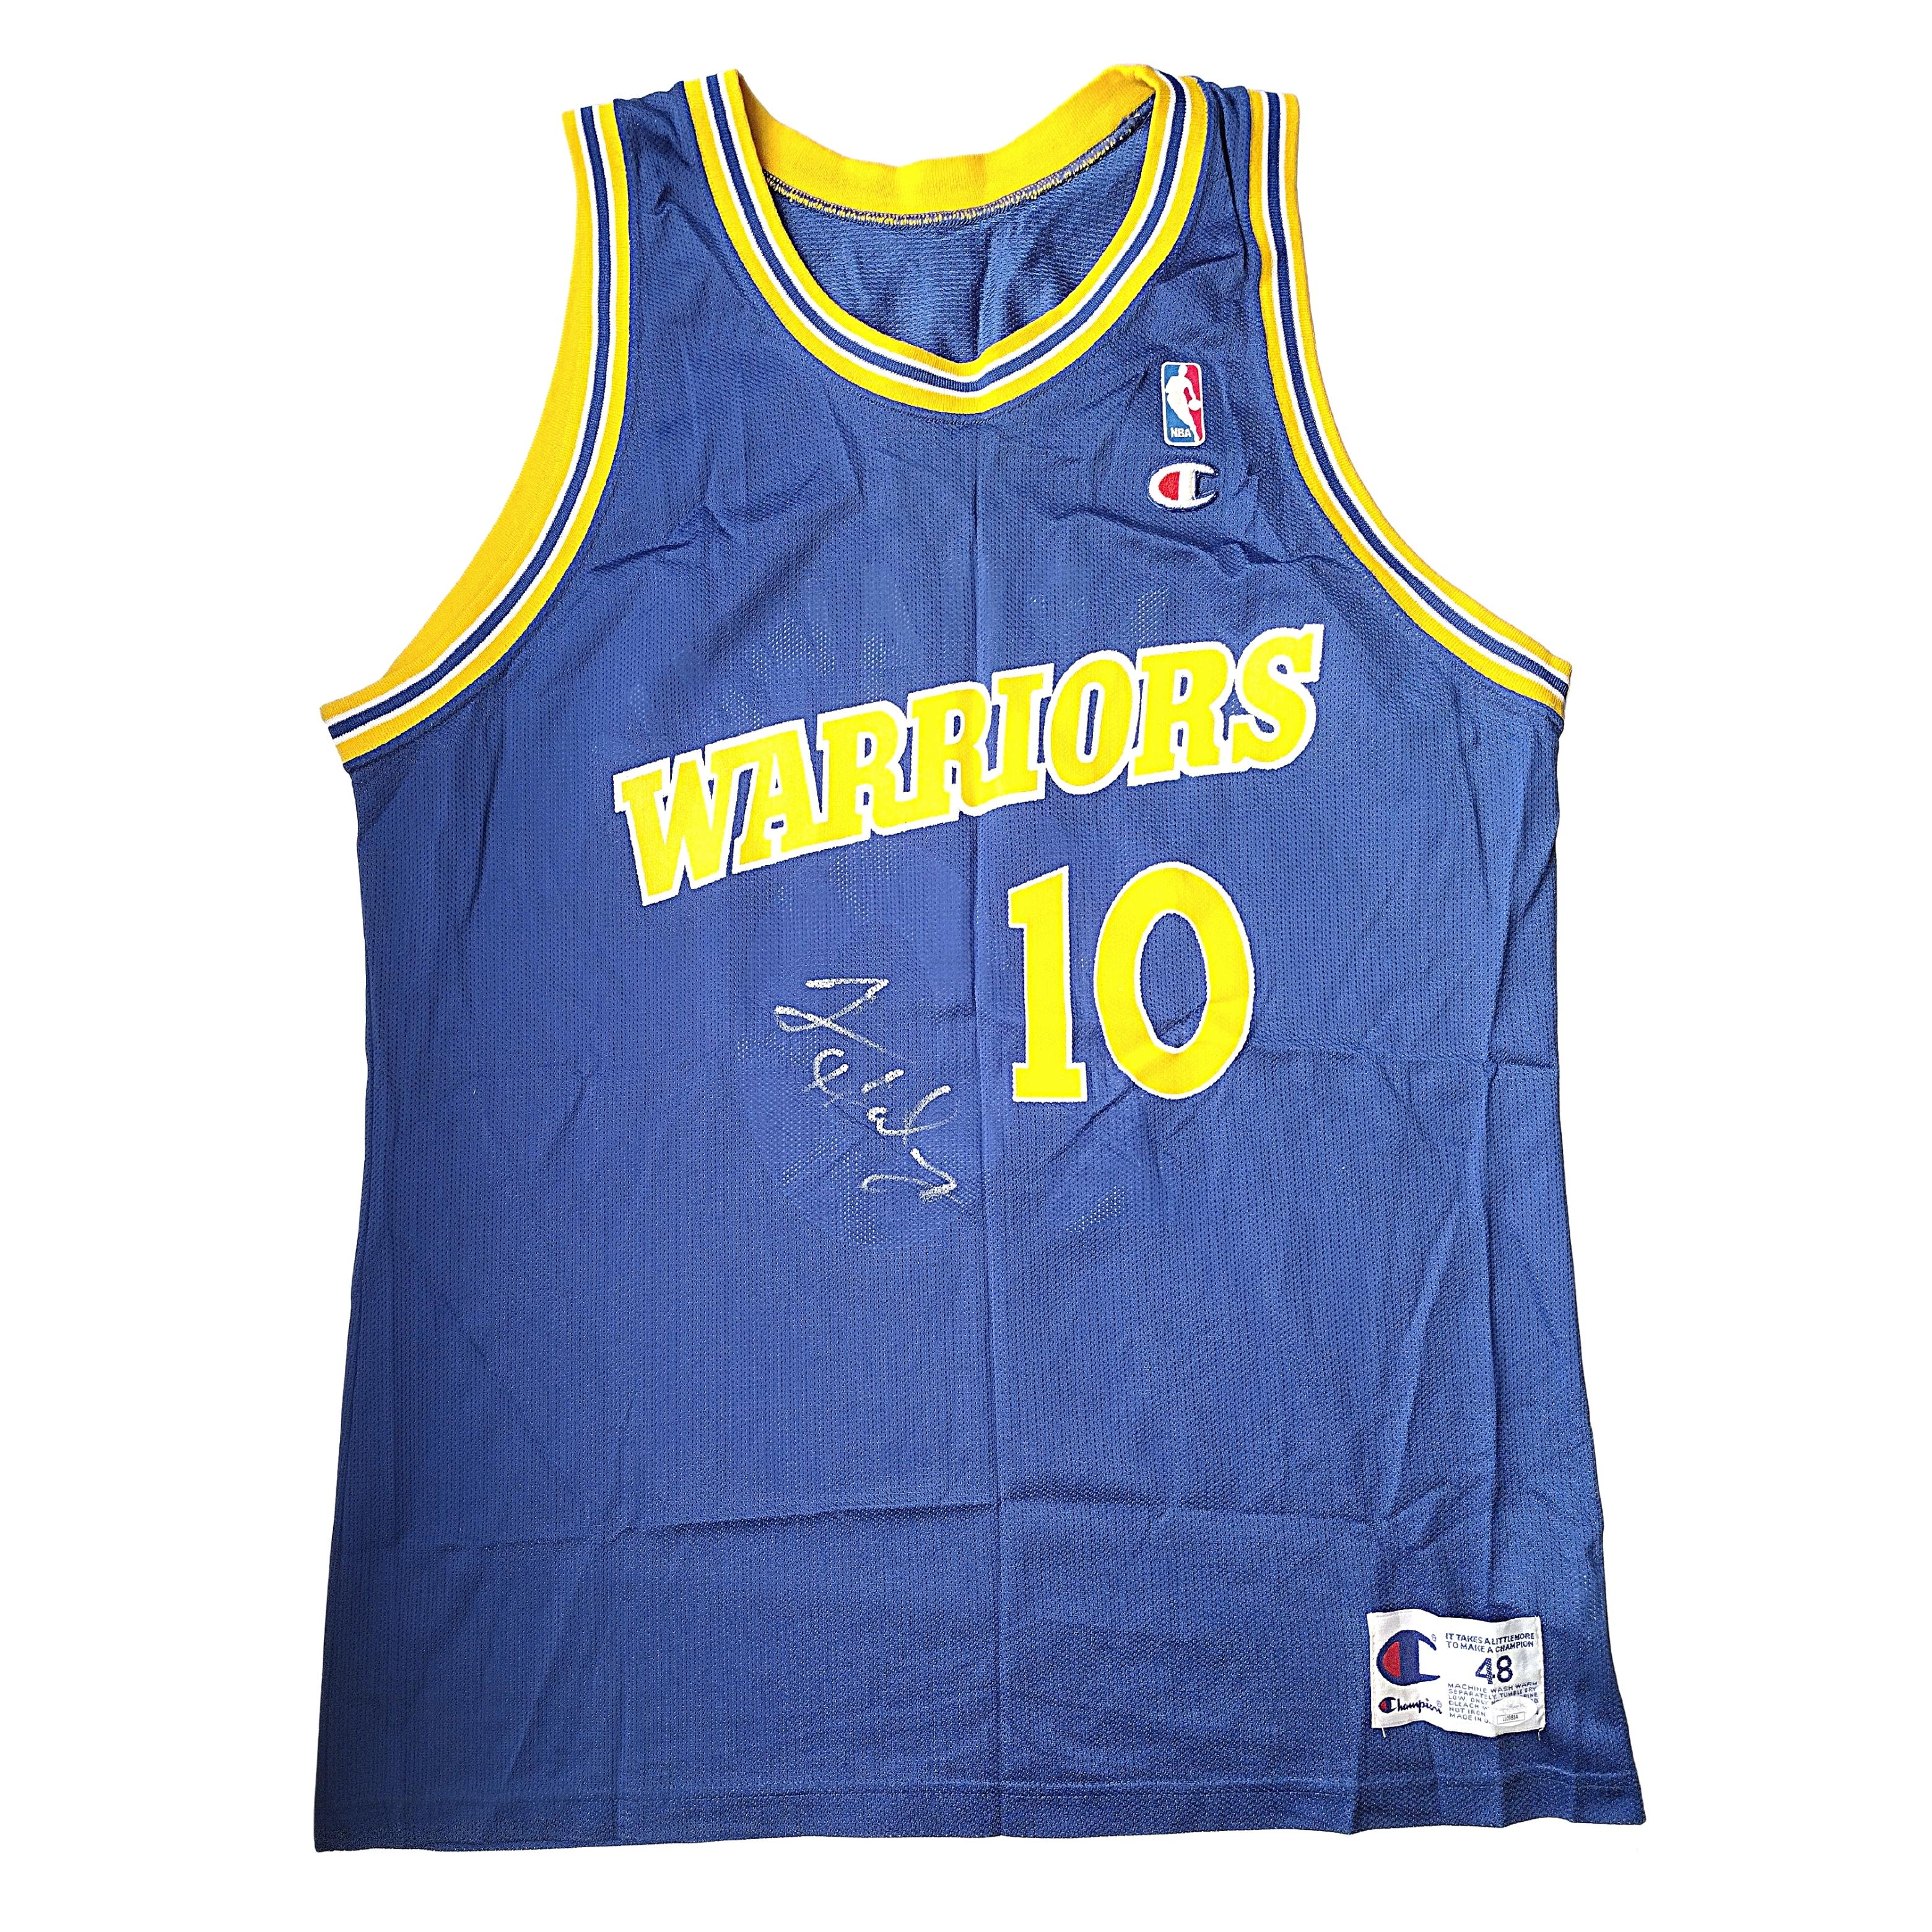 Warriors Vintage Jersey